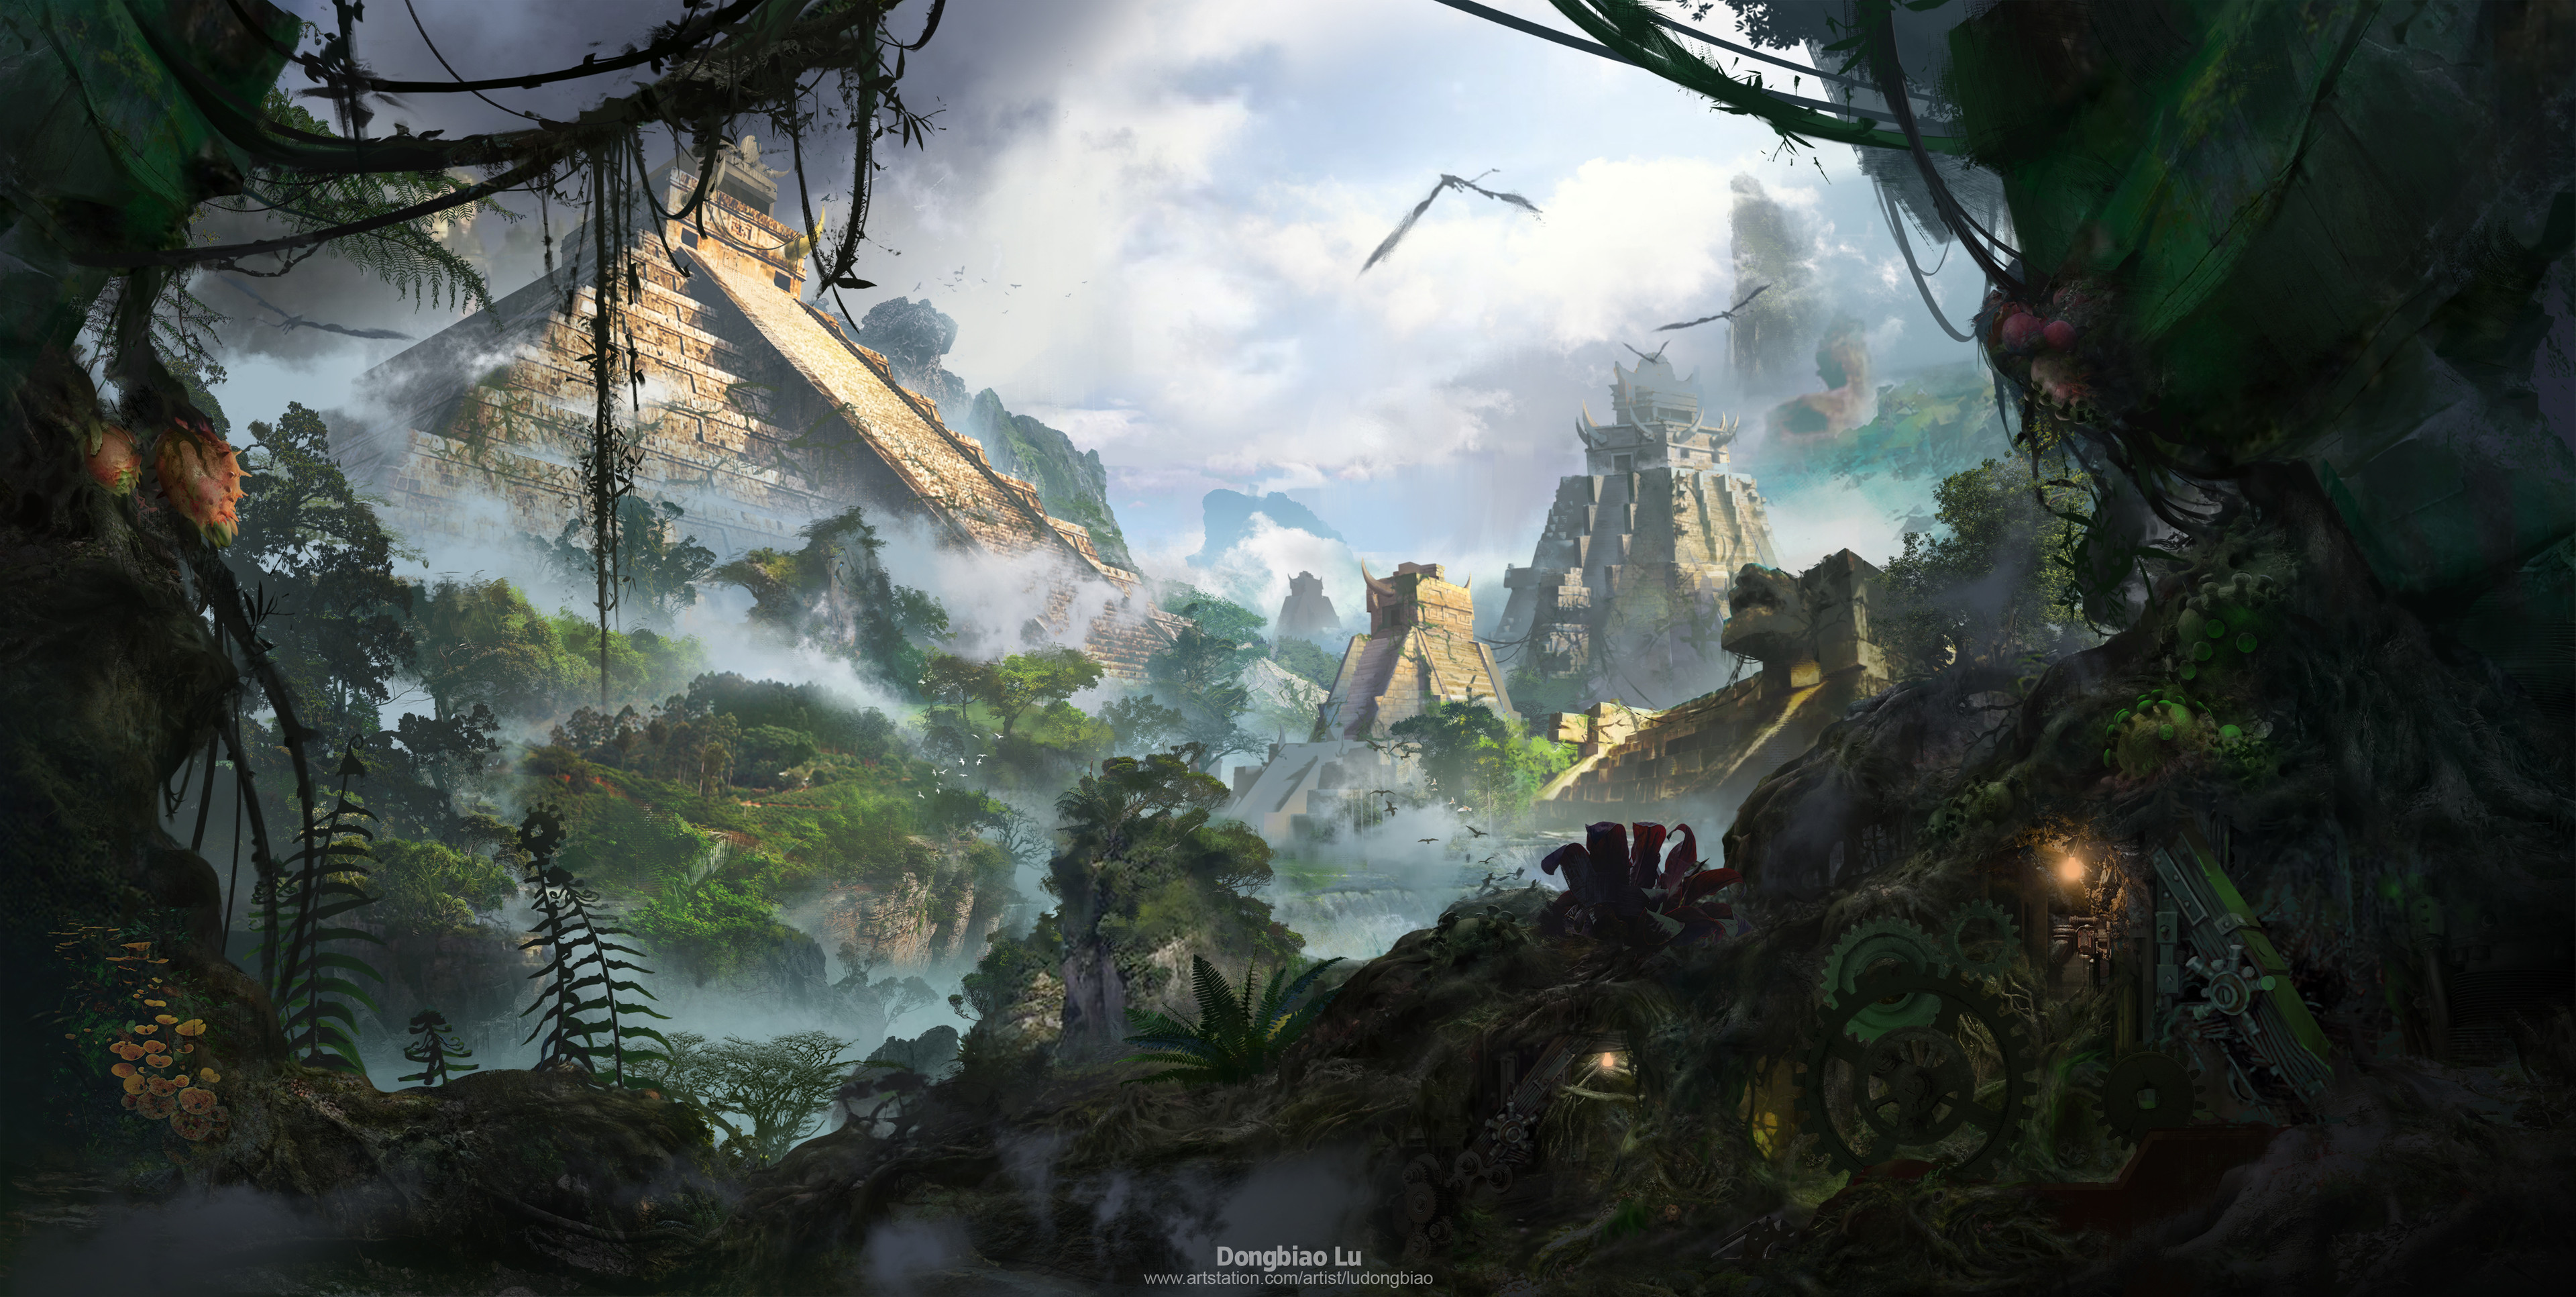 General 3840x1933 Dongbiao Lu digital art landscape forest mountains ruins clouds jungle birds